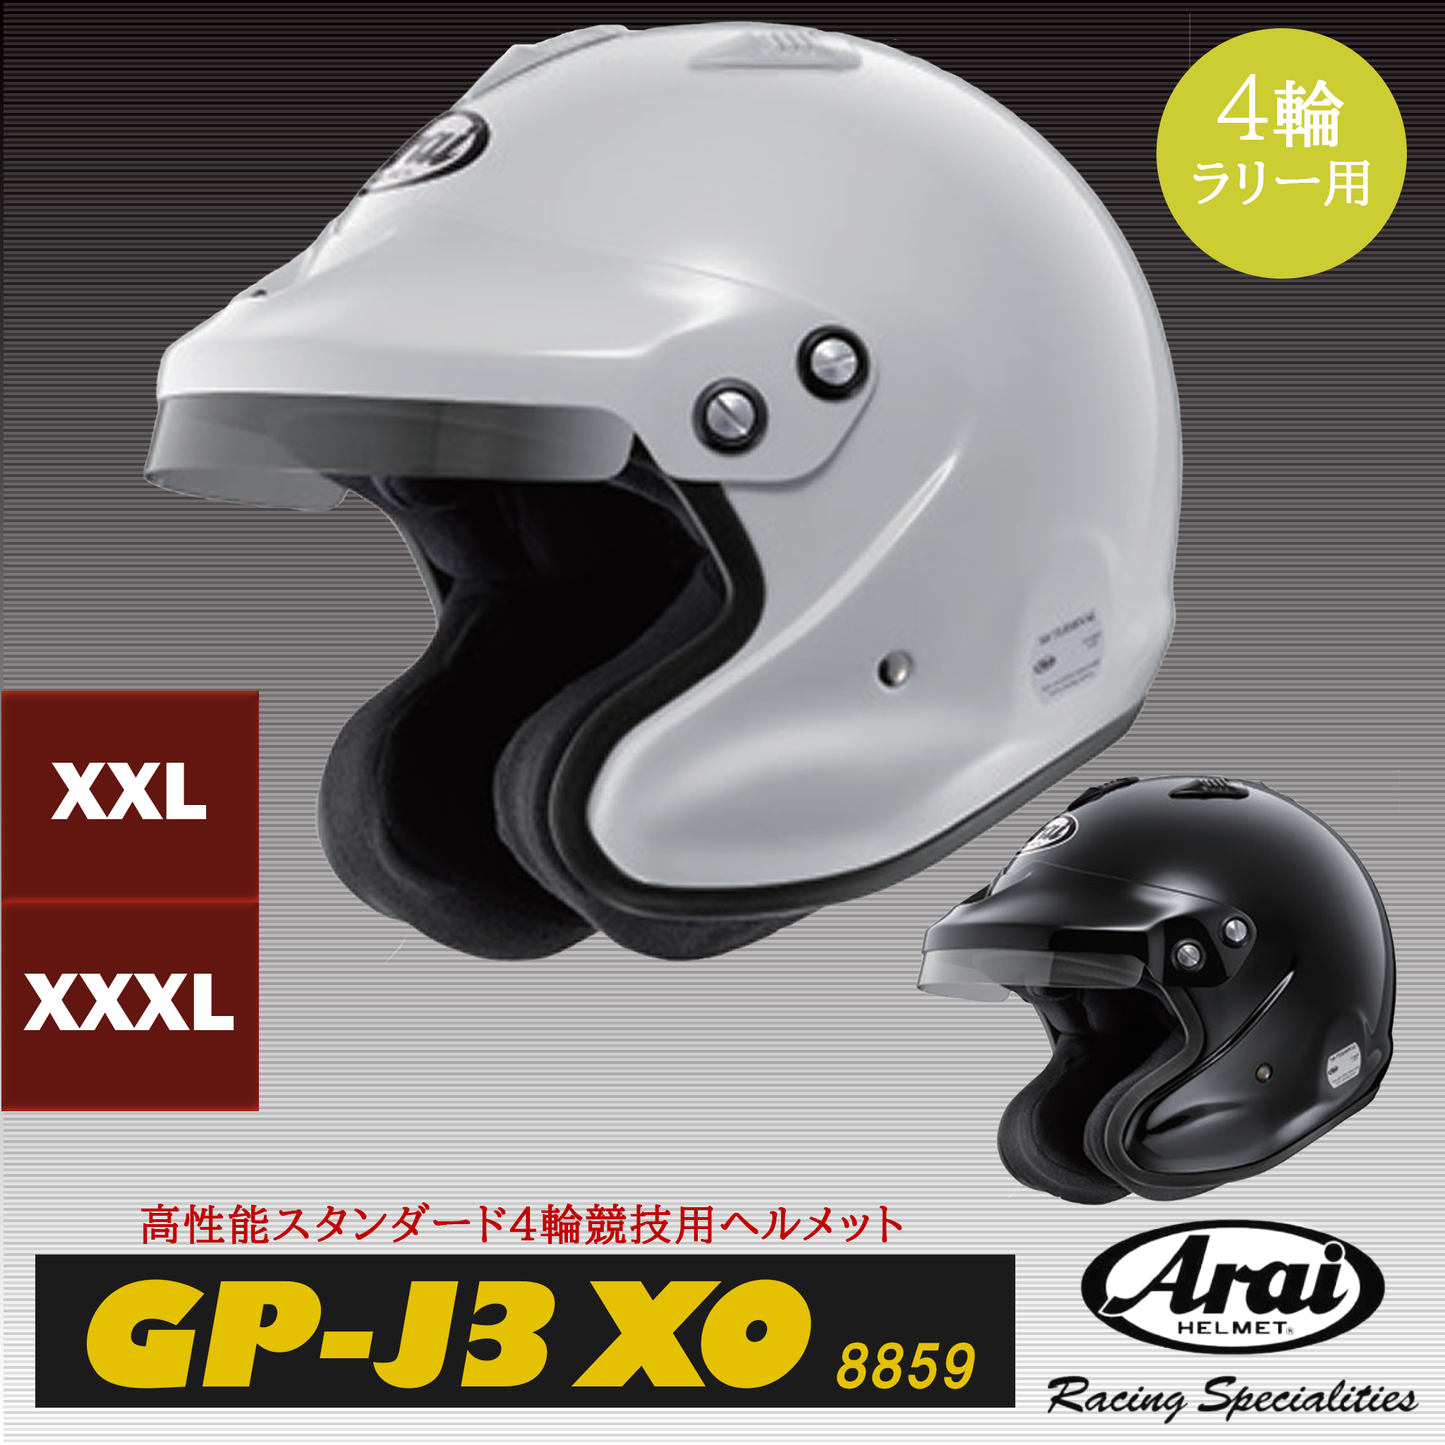 [GP-J3 XO 8859] 4輪ラリー用 ヘルメット  Arai